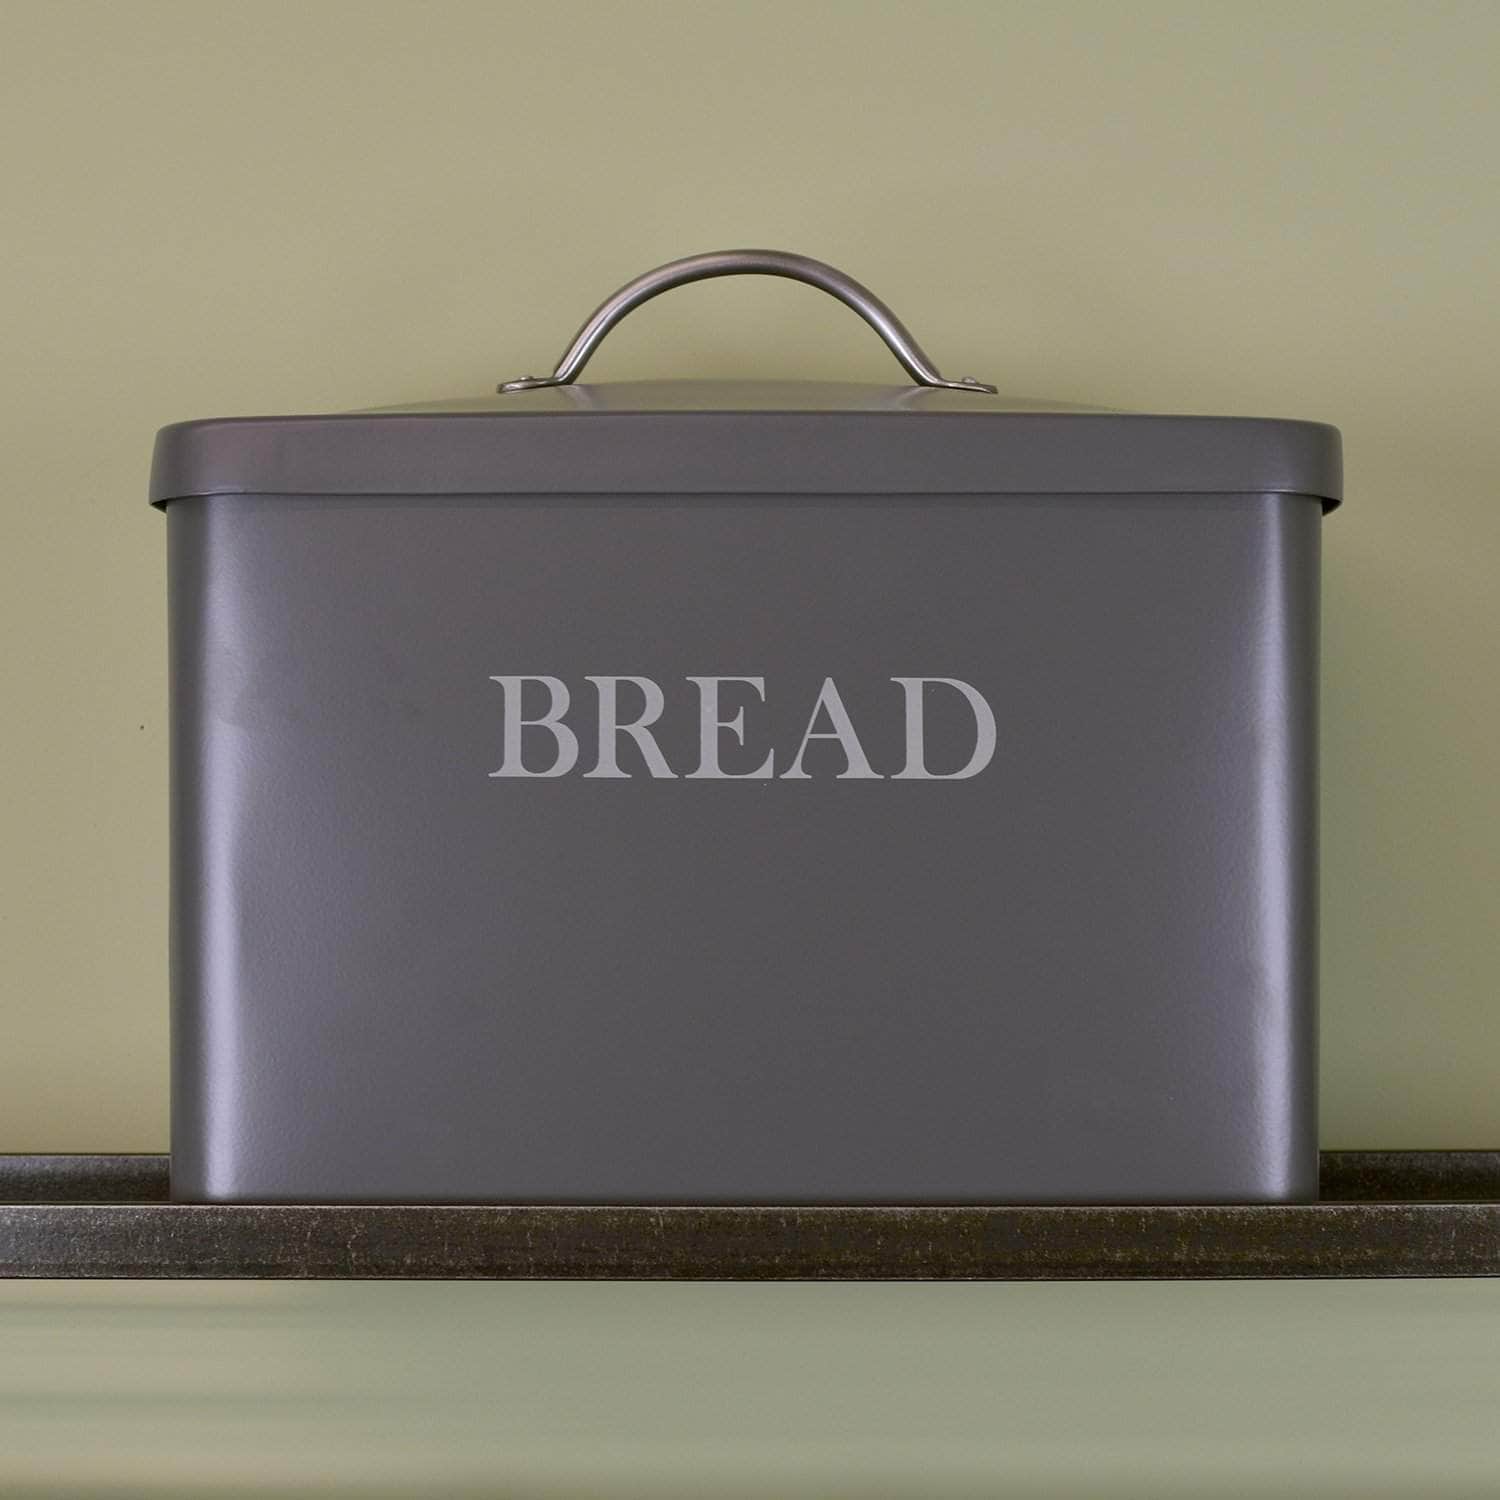 *Not quite perfect* Steel bread bin in charcoal